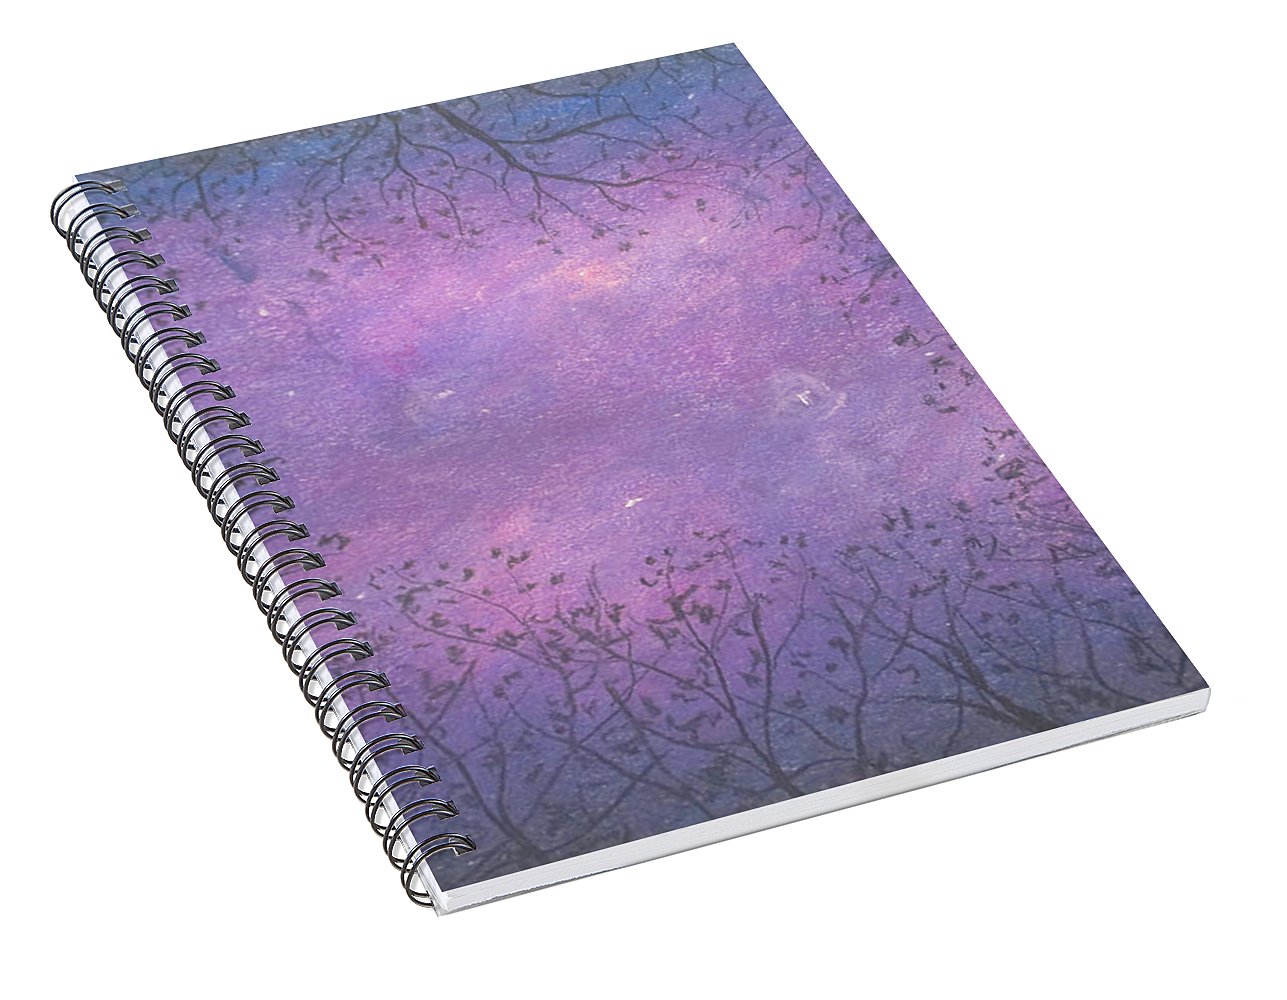 Cosmic Dreams - Spiral Notebook